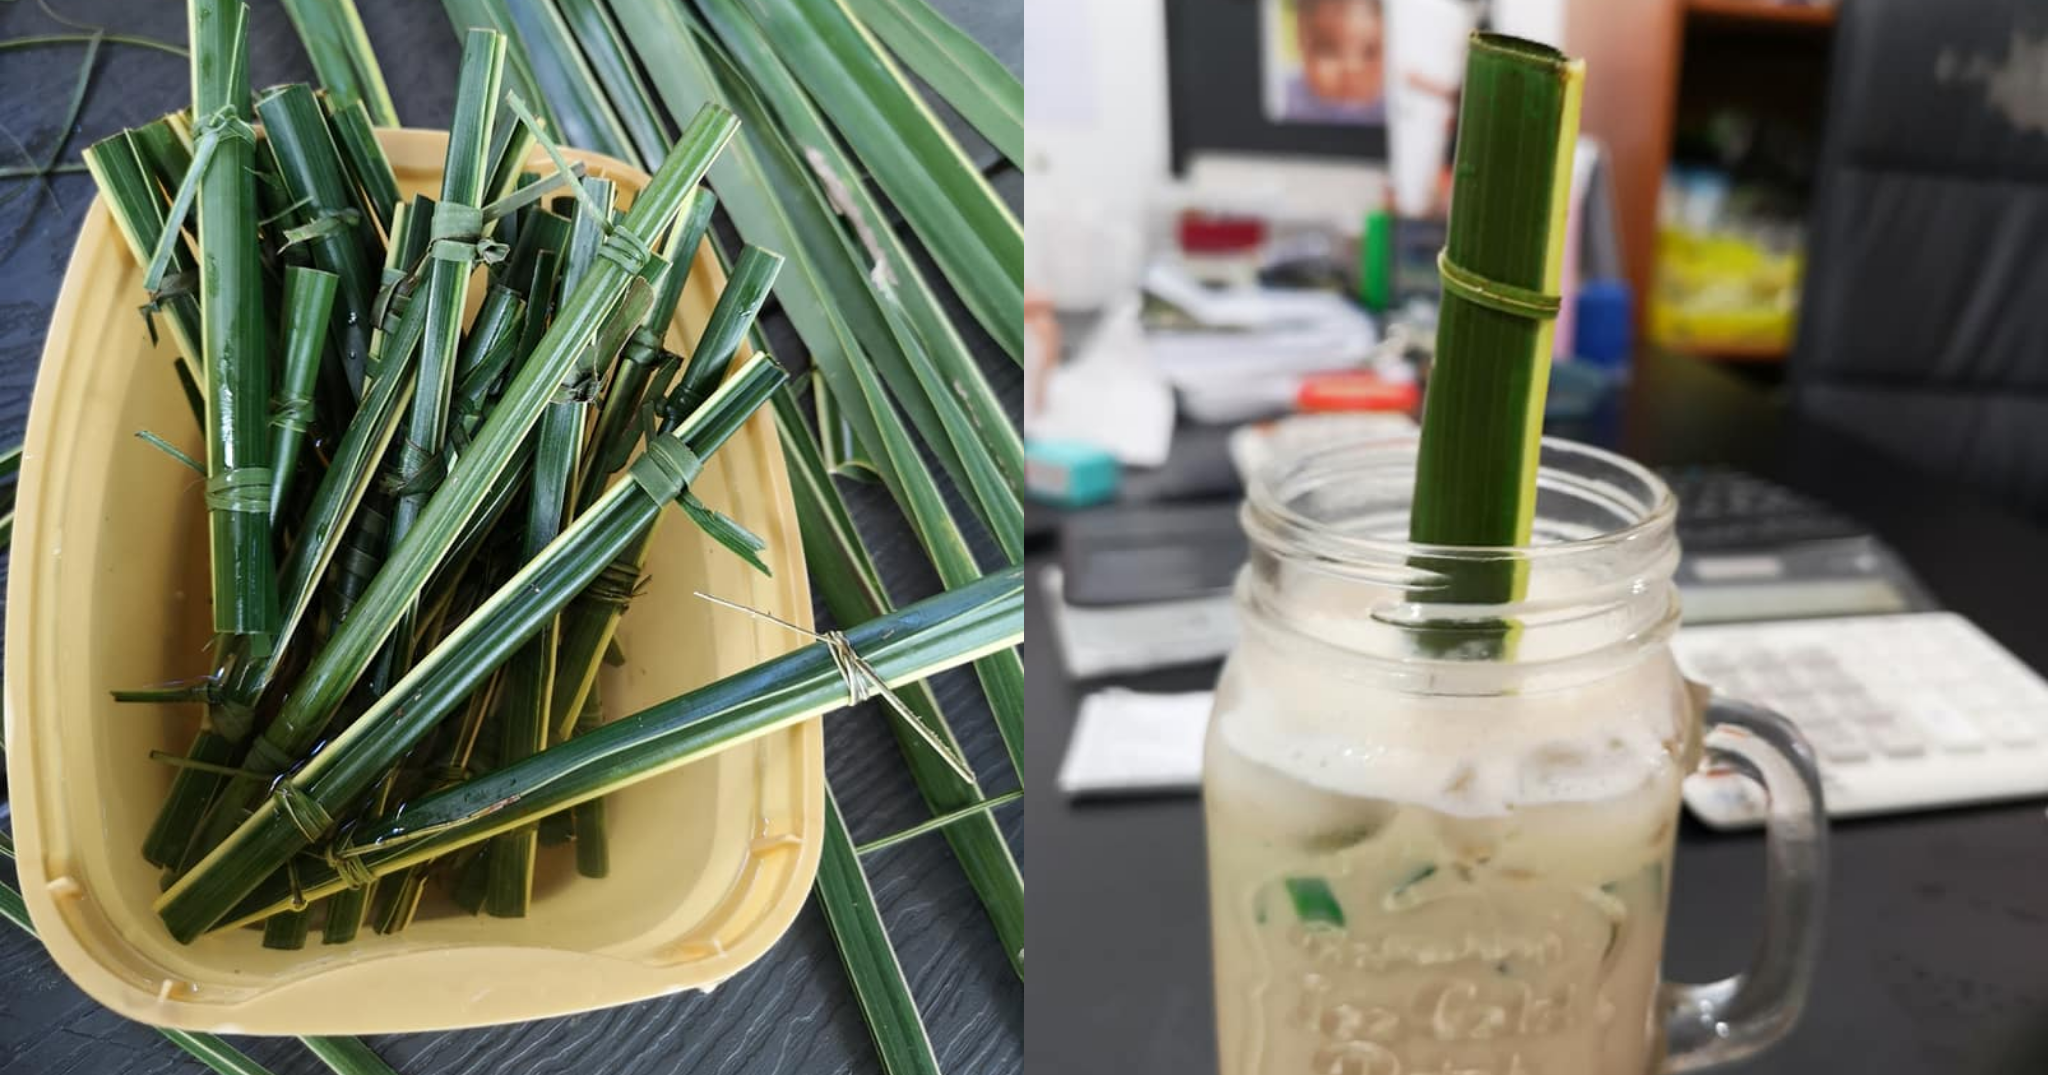 Siargao cafe lukay straws alternative to plastic straws